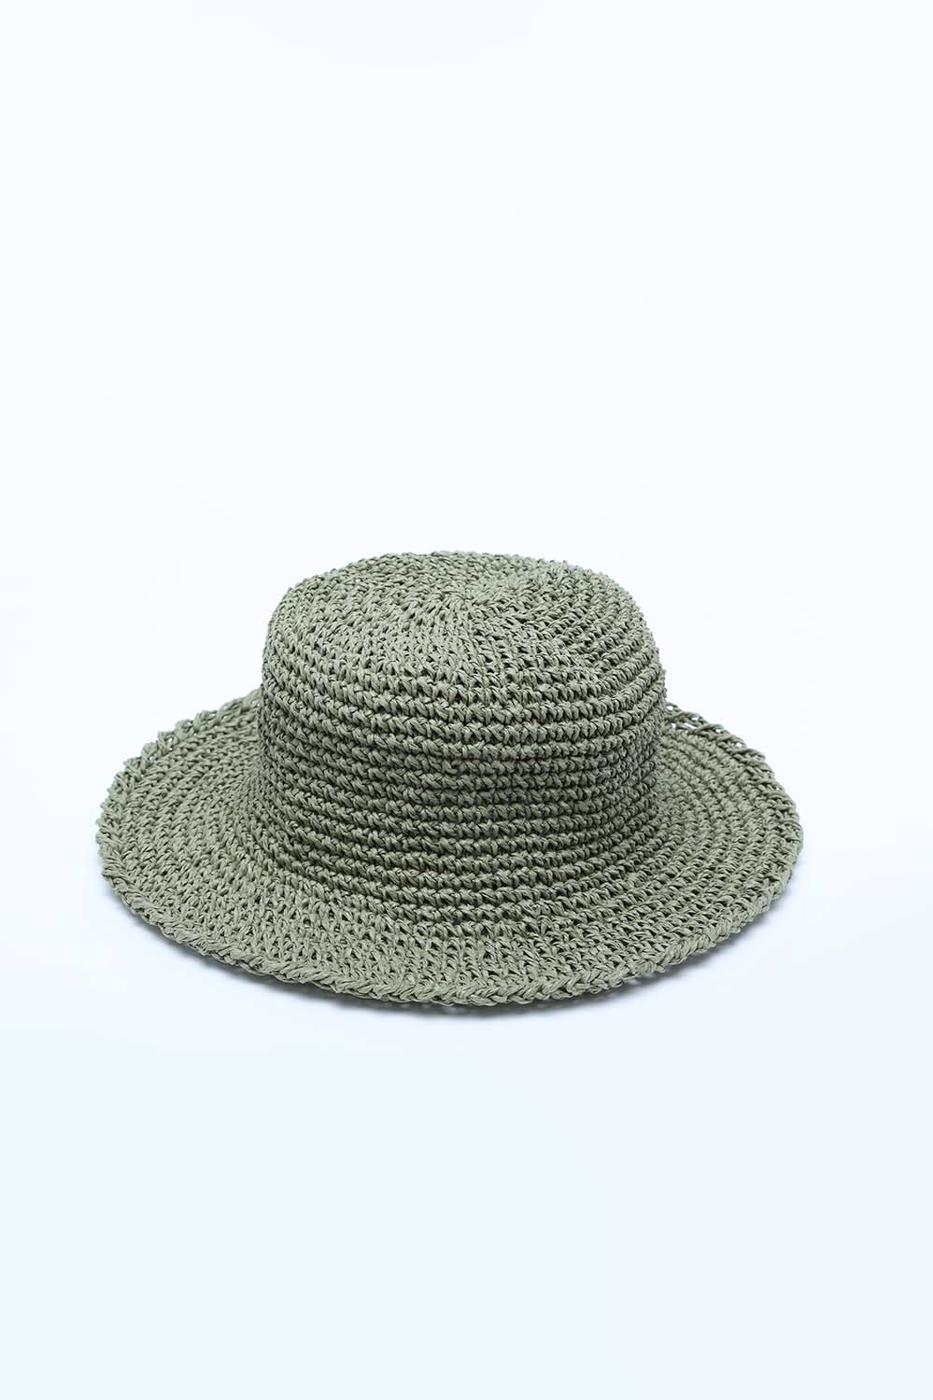 Bayan ÇAY AĞACI YEŞİLİ Çay Ağacı Yeşili Renk Kadın Şapka